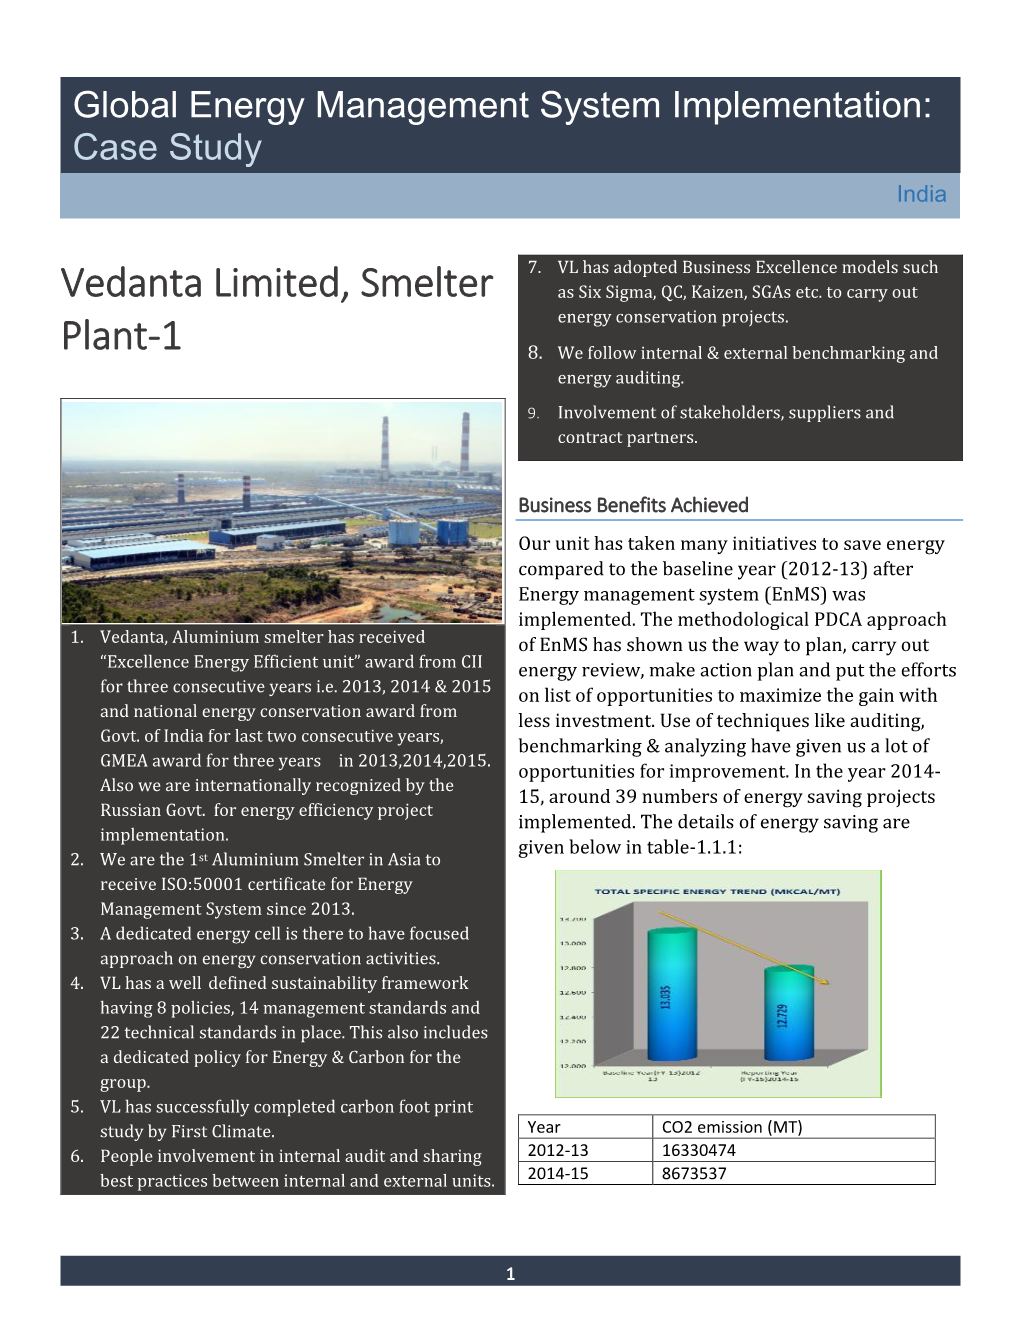 Vedanta Limited, Smelter Plant-1